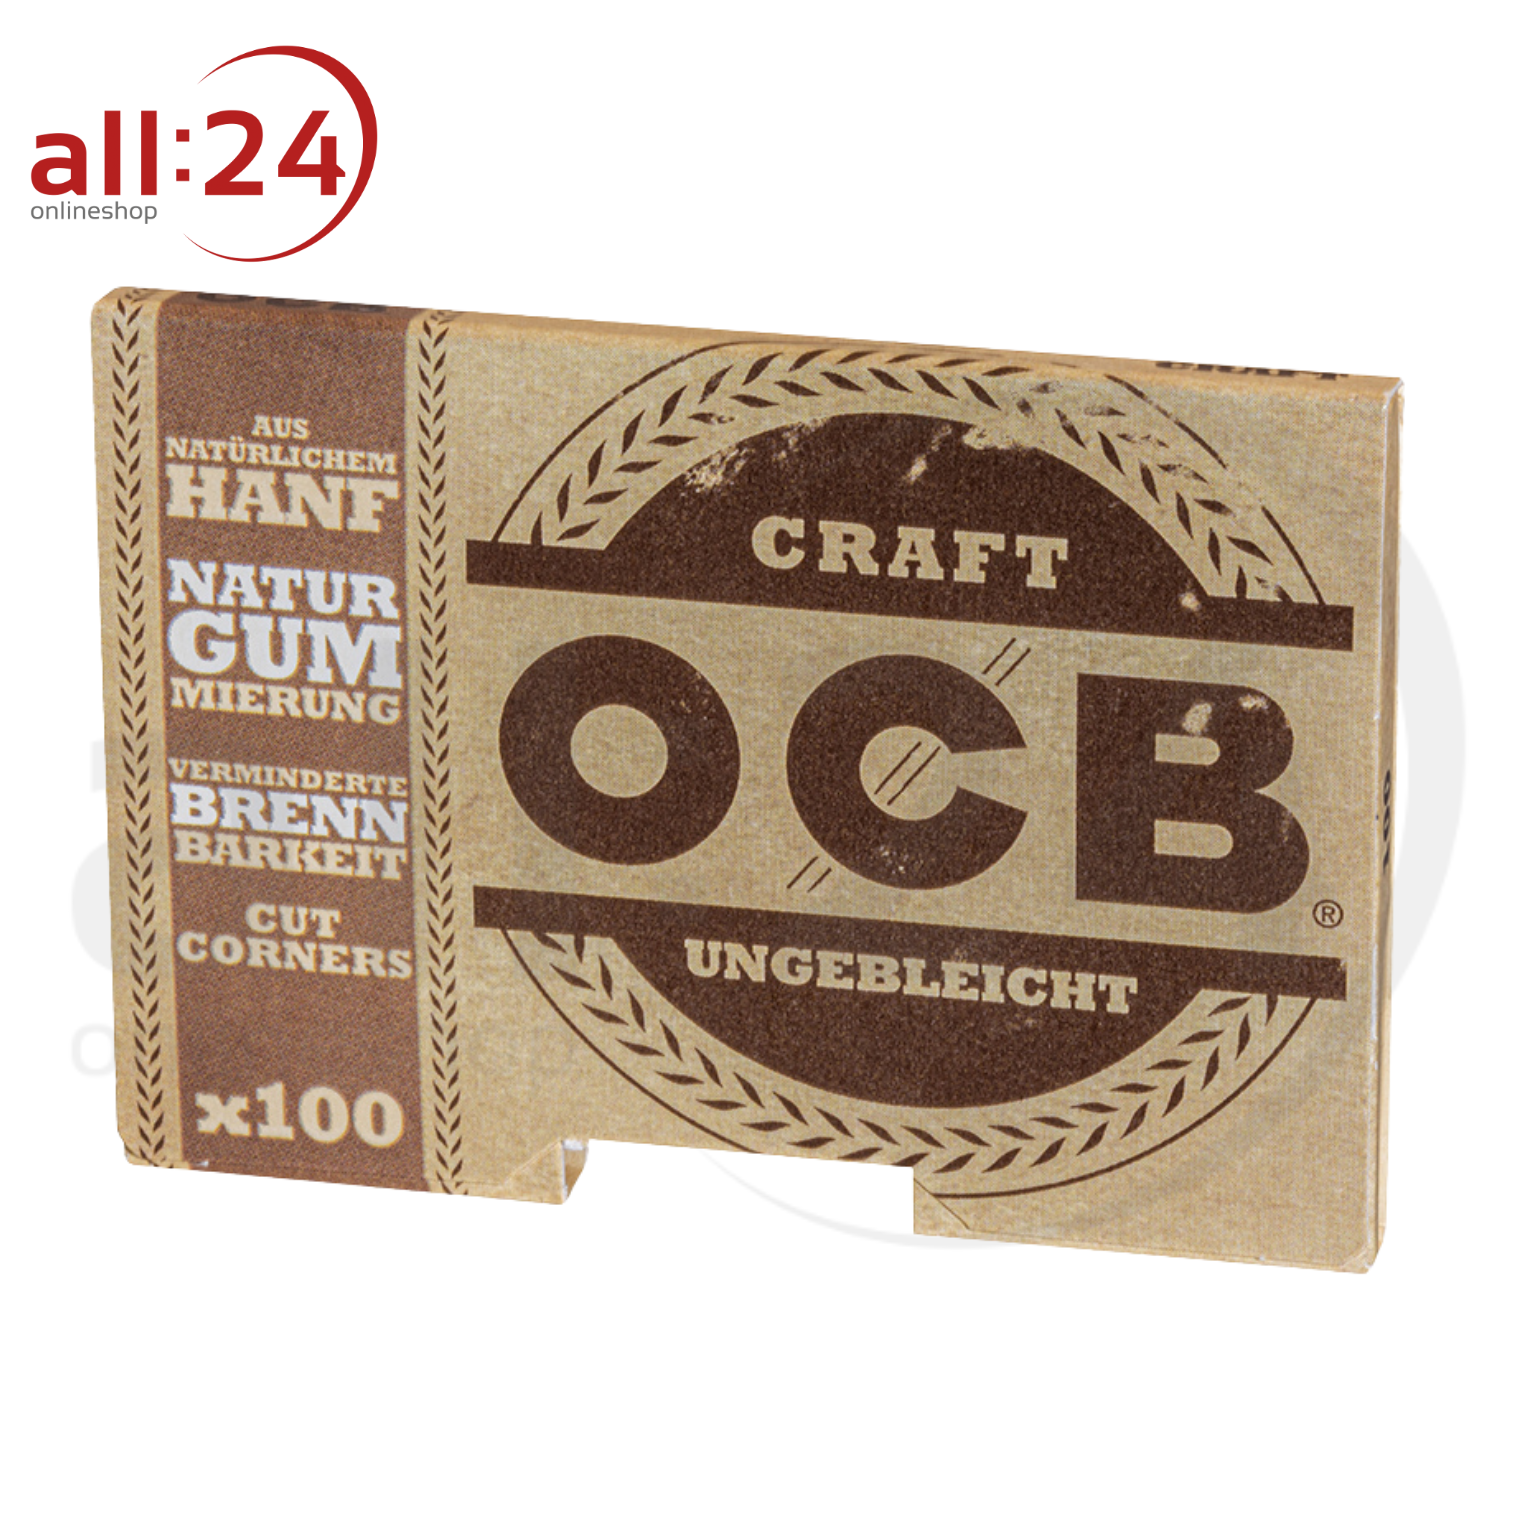 OCB Craft Ungebleichtes Zigarettenpapier - 25 Heftchen à 100 Blatt 